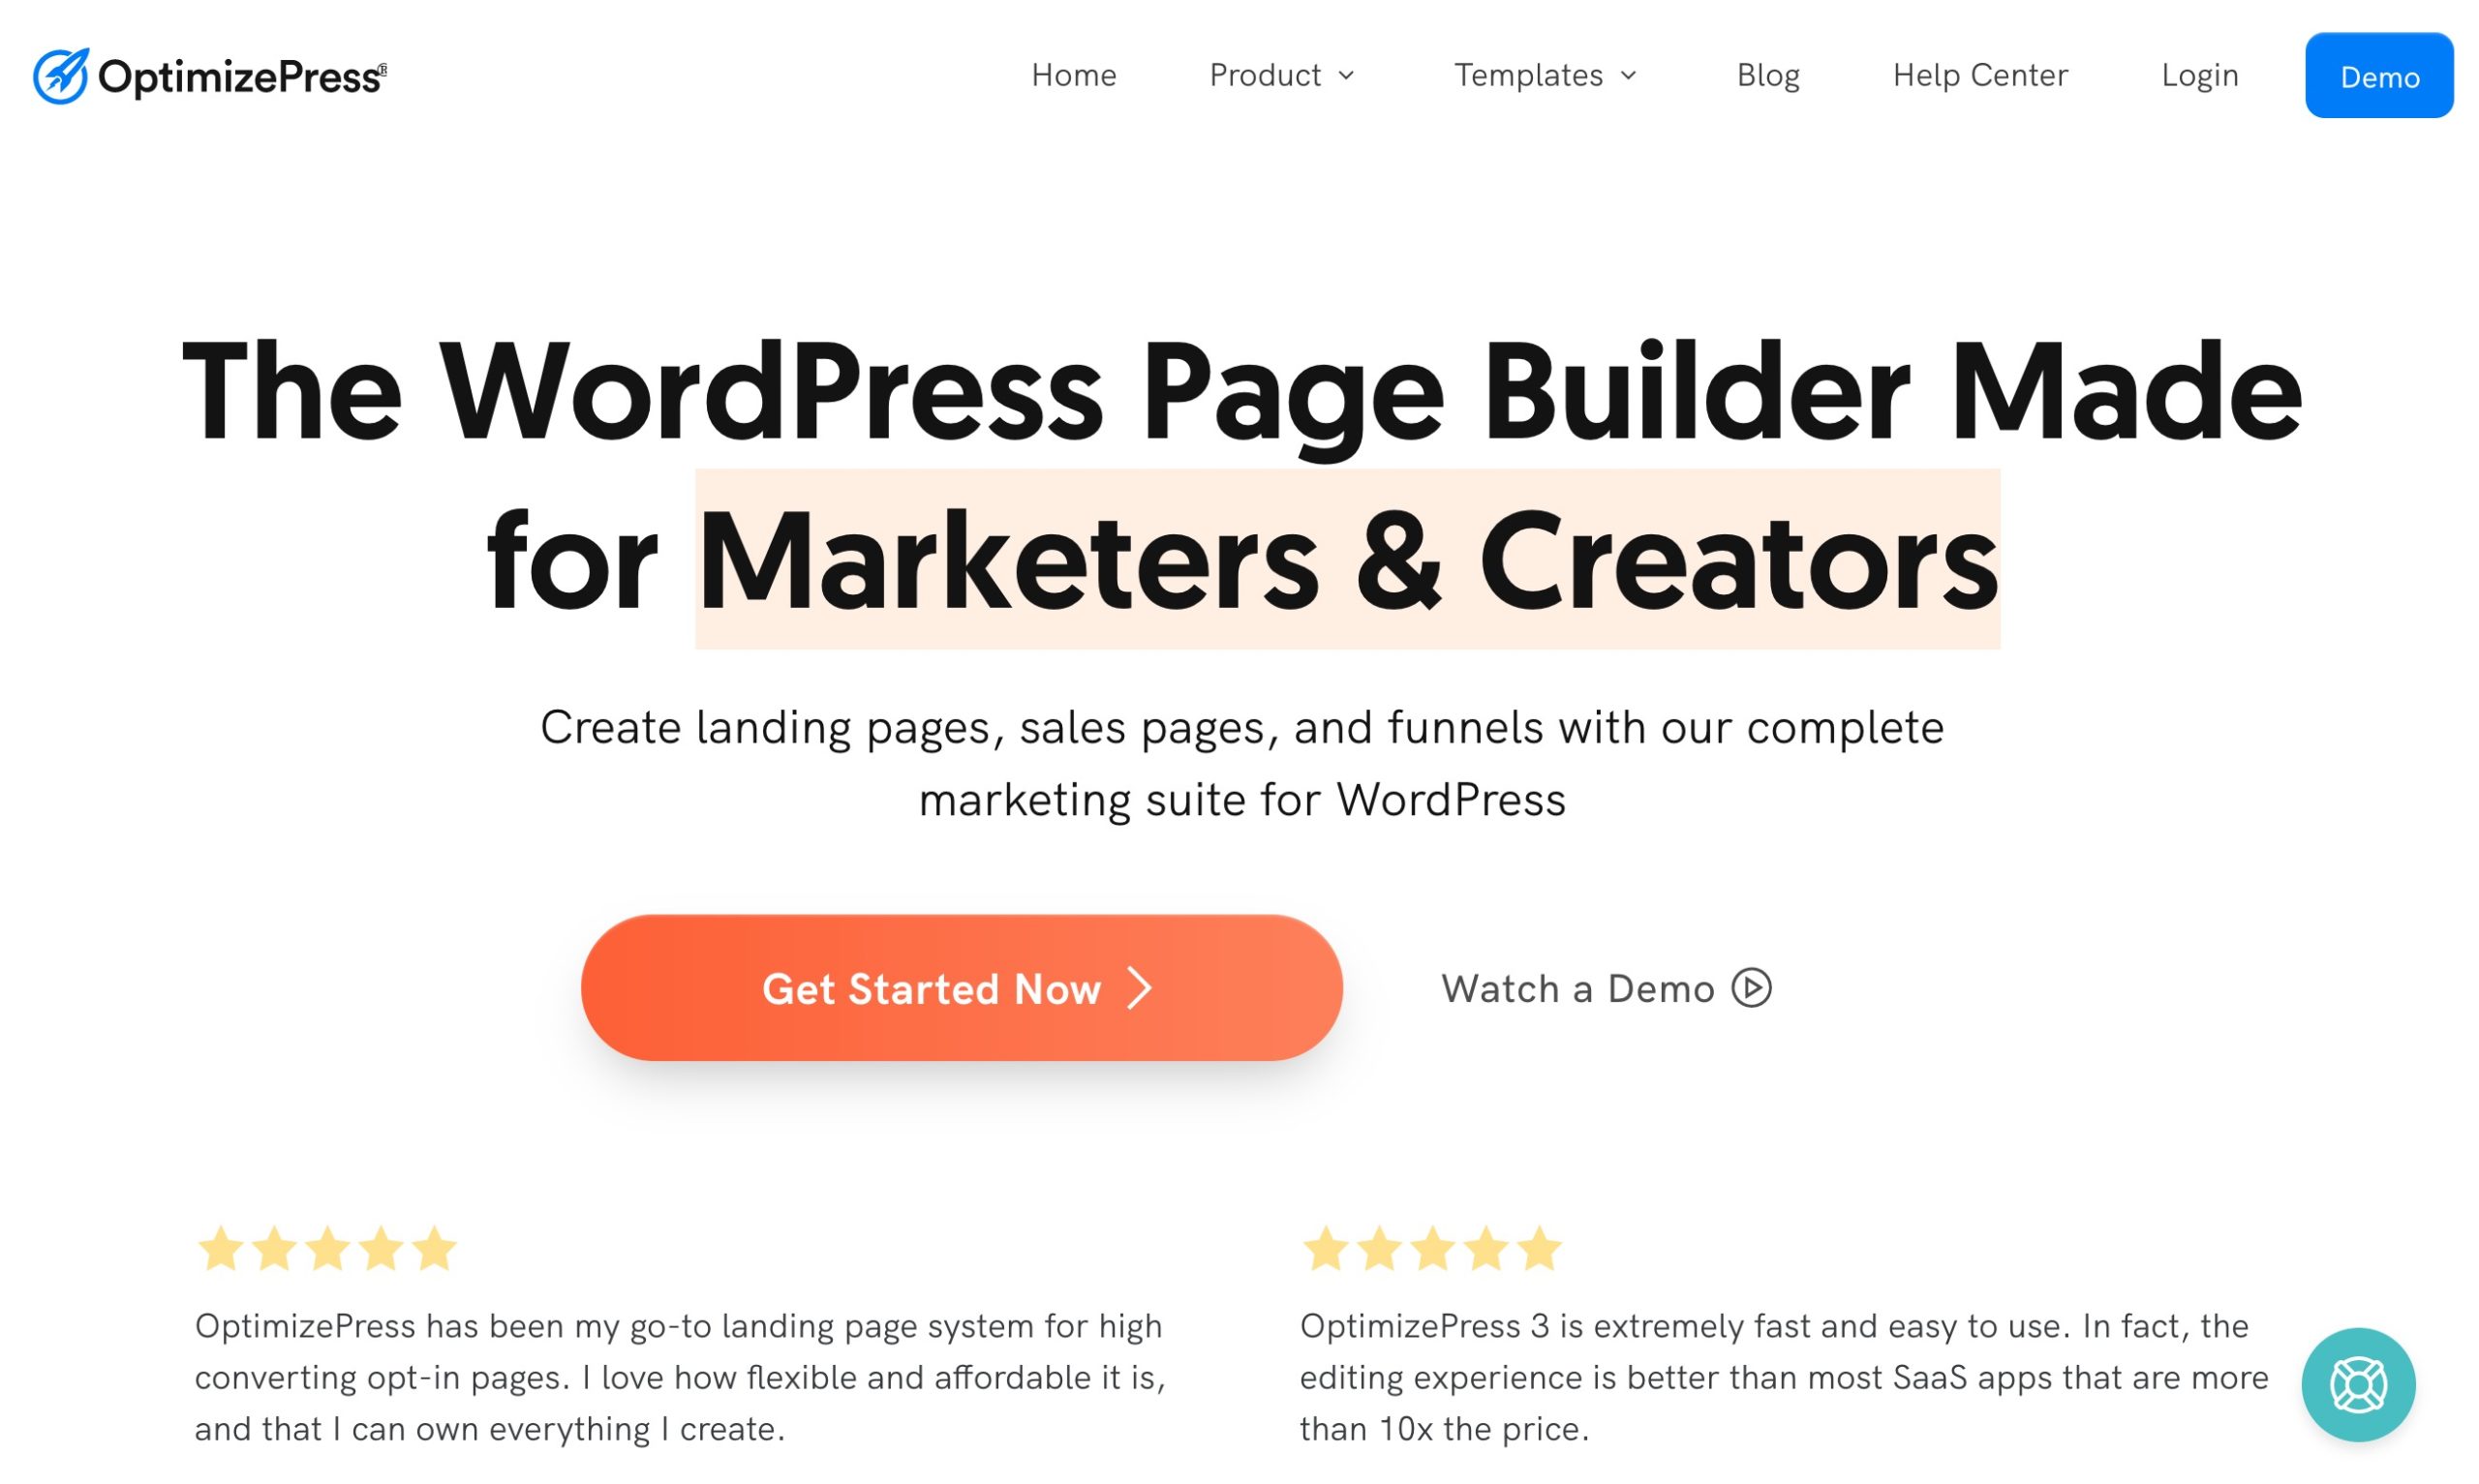 Best landing page builder plugins for WordPress: OptimizePress